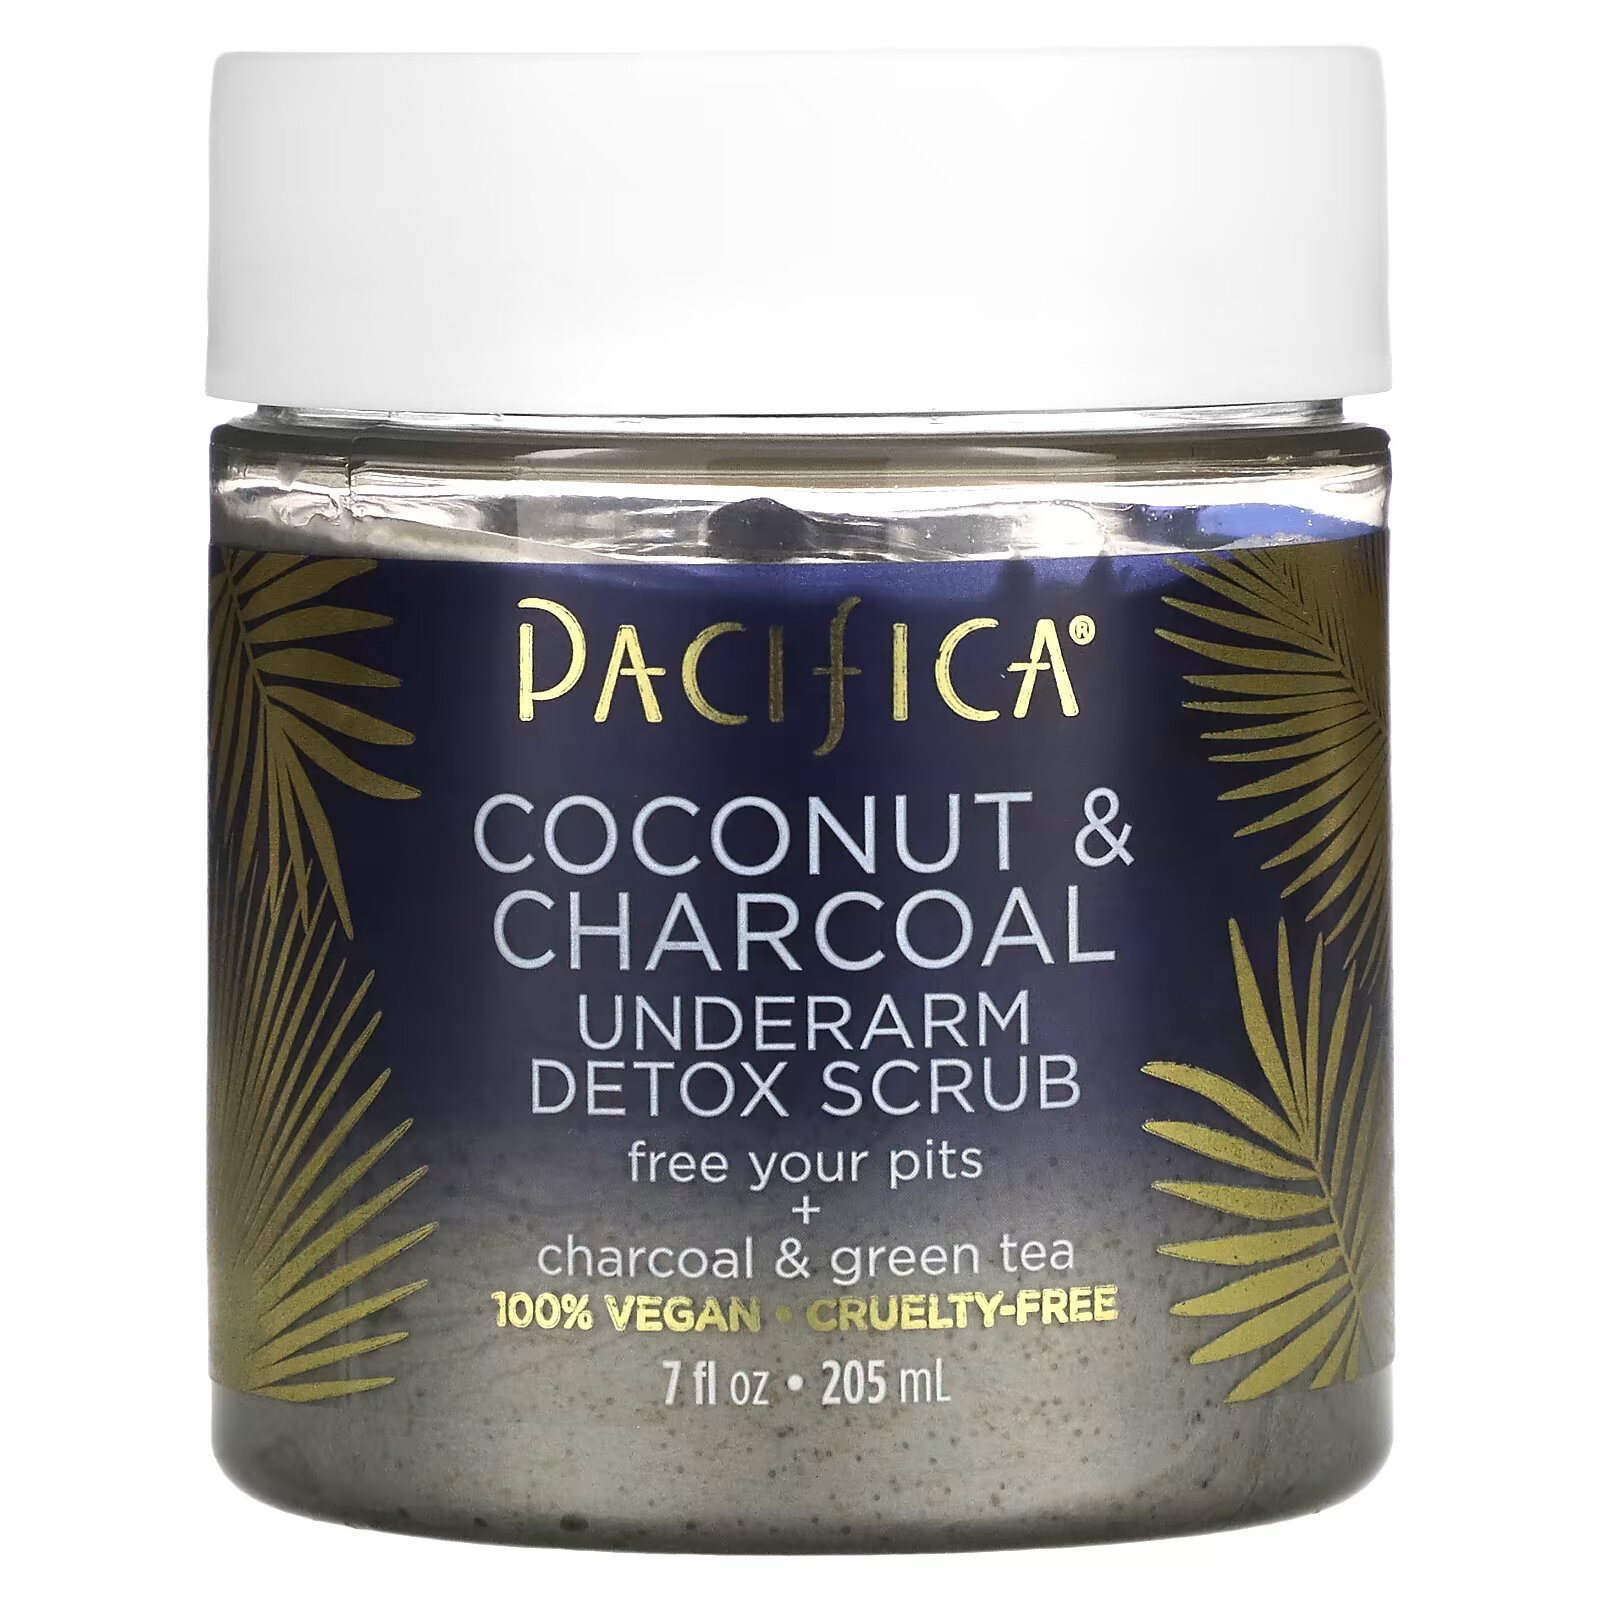 Детокс-скраб для подмышек Pacifica Coconut & Charcoal, 205 мл